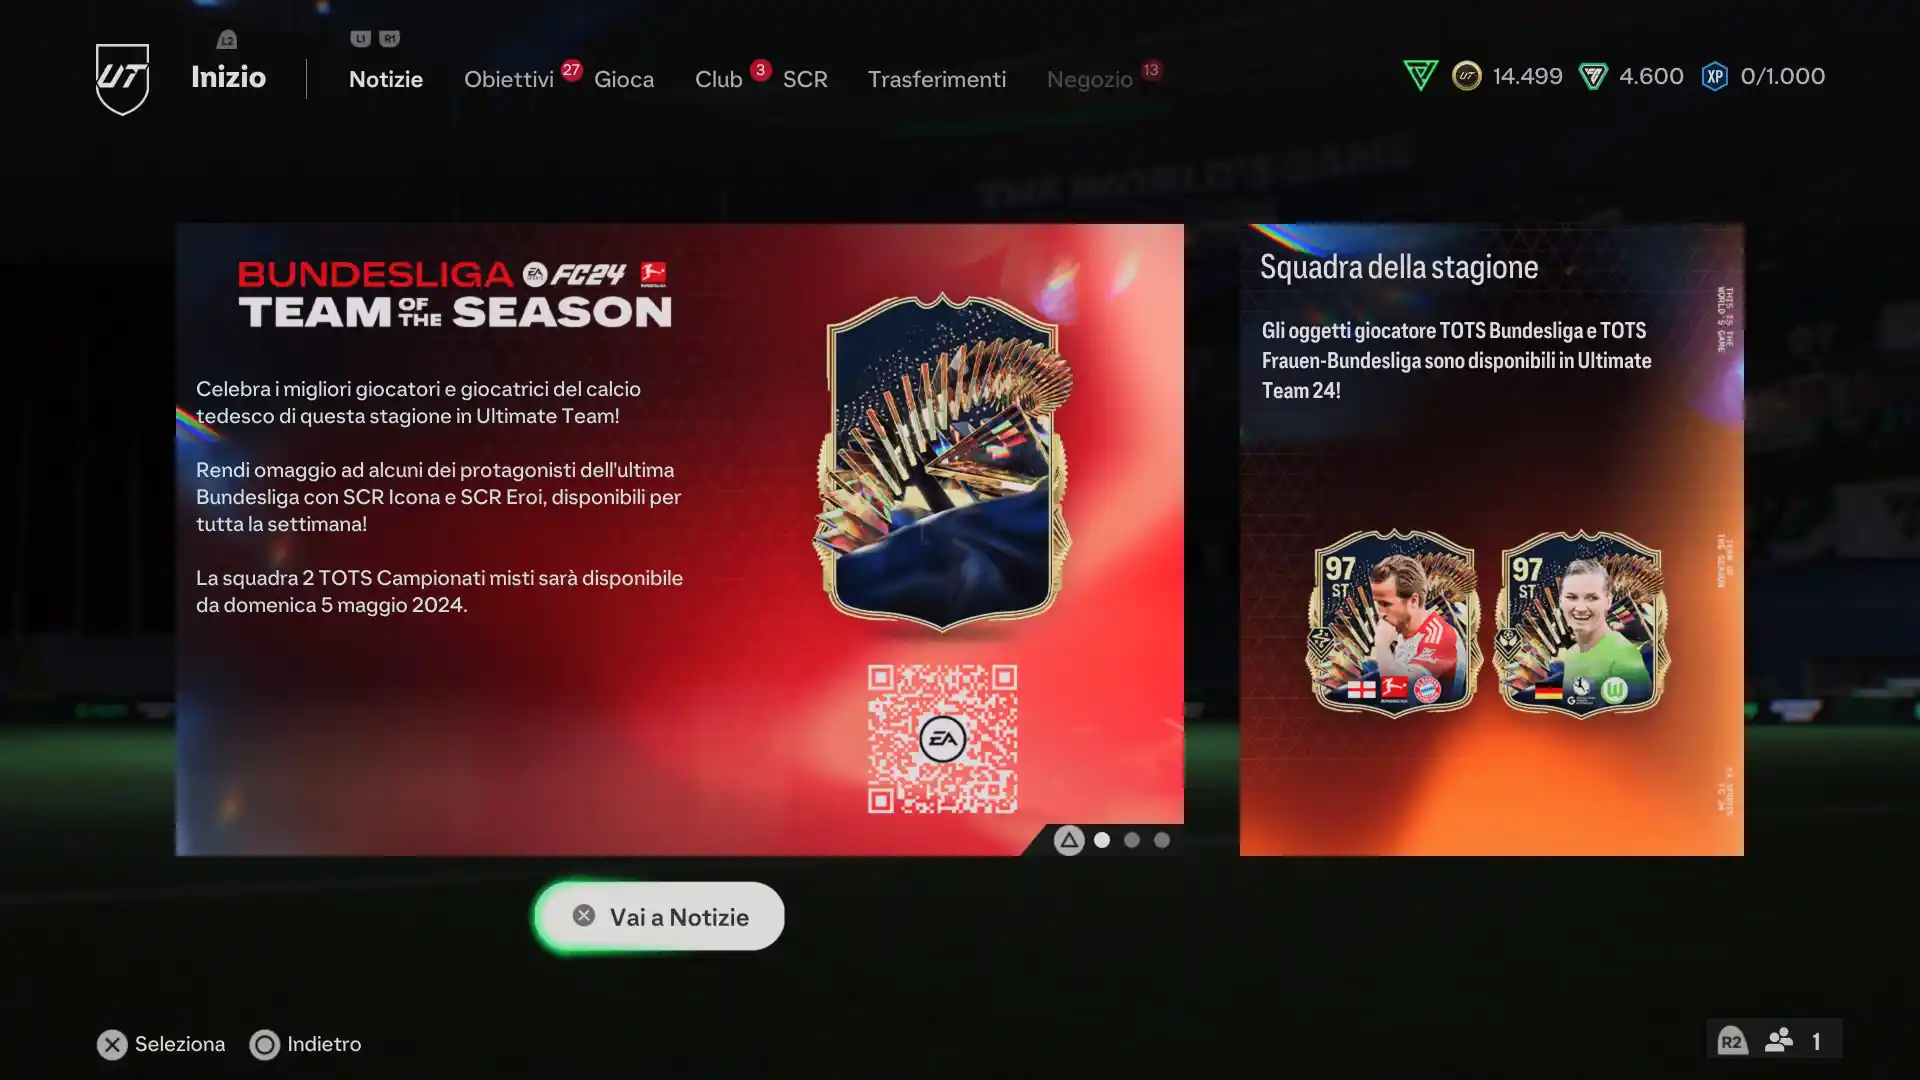 EA Sports FC 24 Ultimate Team - Bundesliga TOTS e Frauen-Bundesliga TOTS: rose complete, SBC, Obiettivi e soluzioni